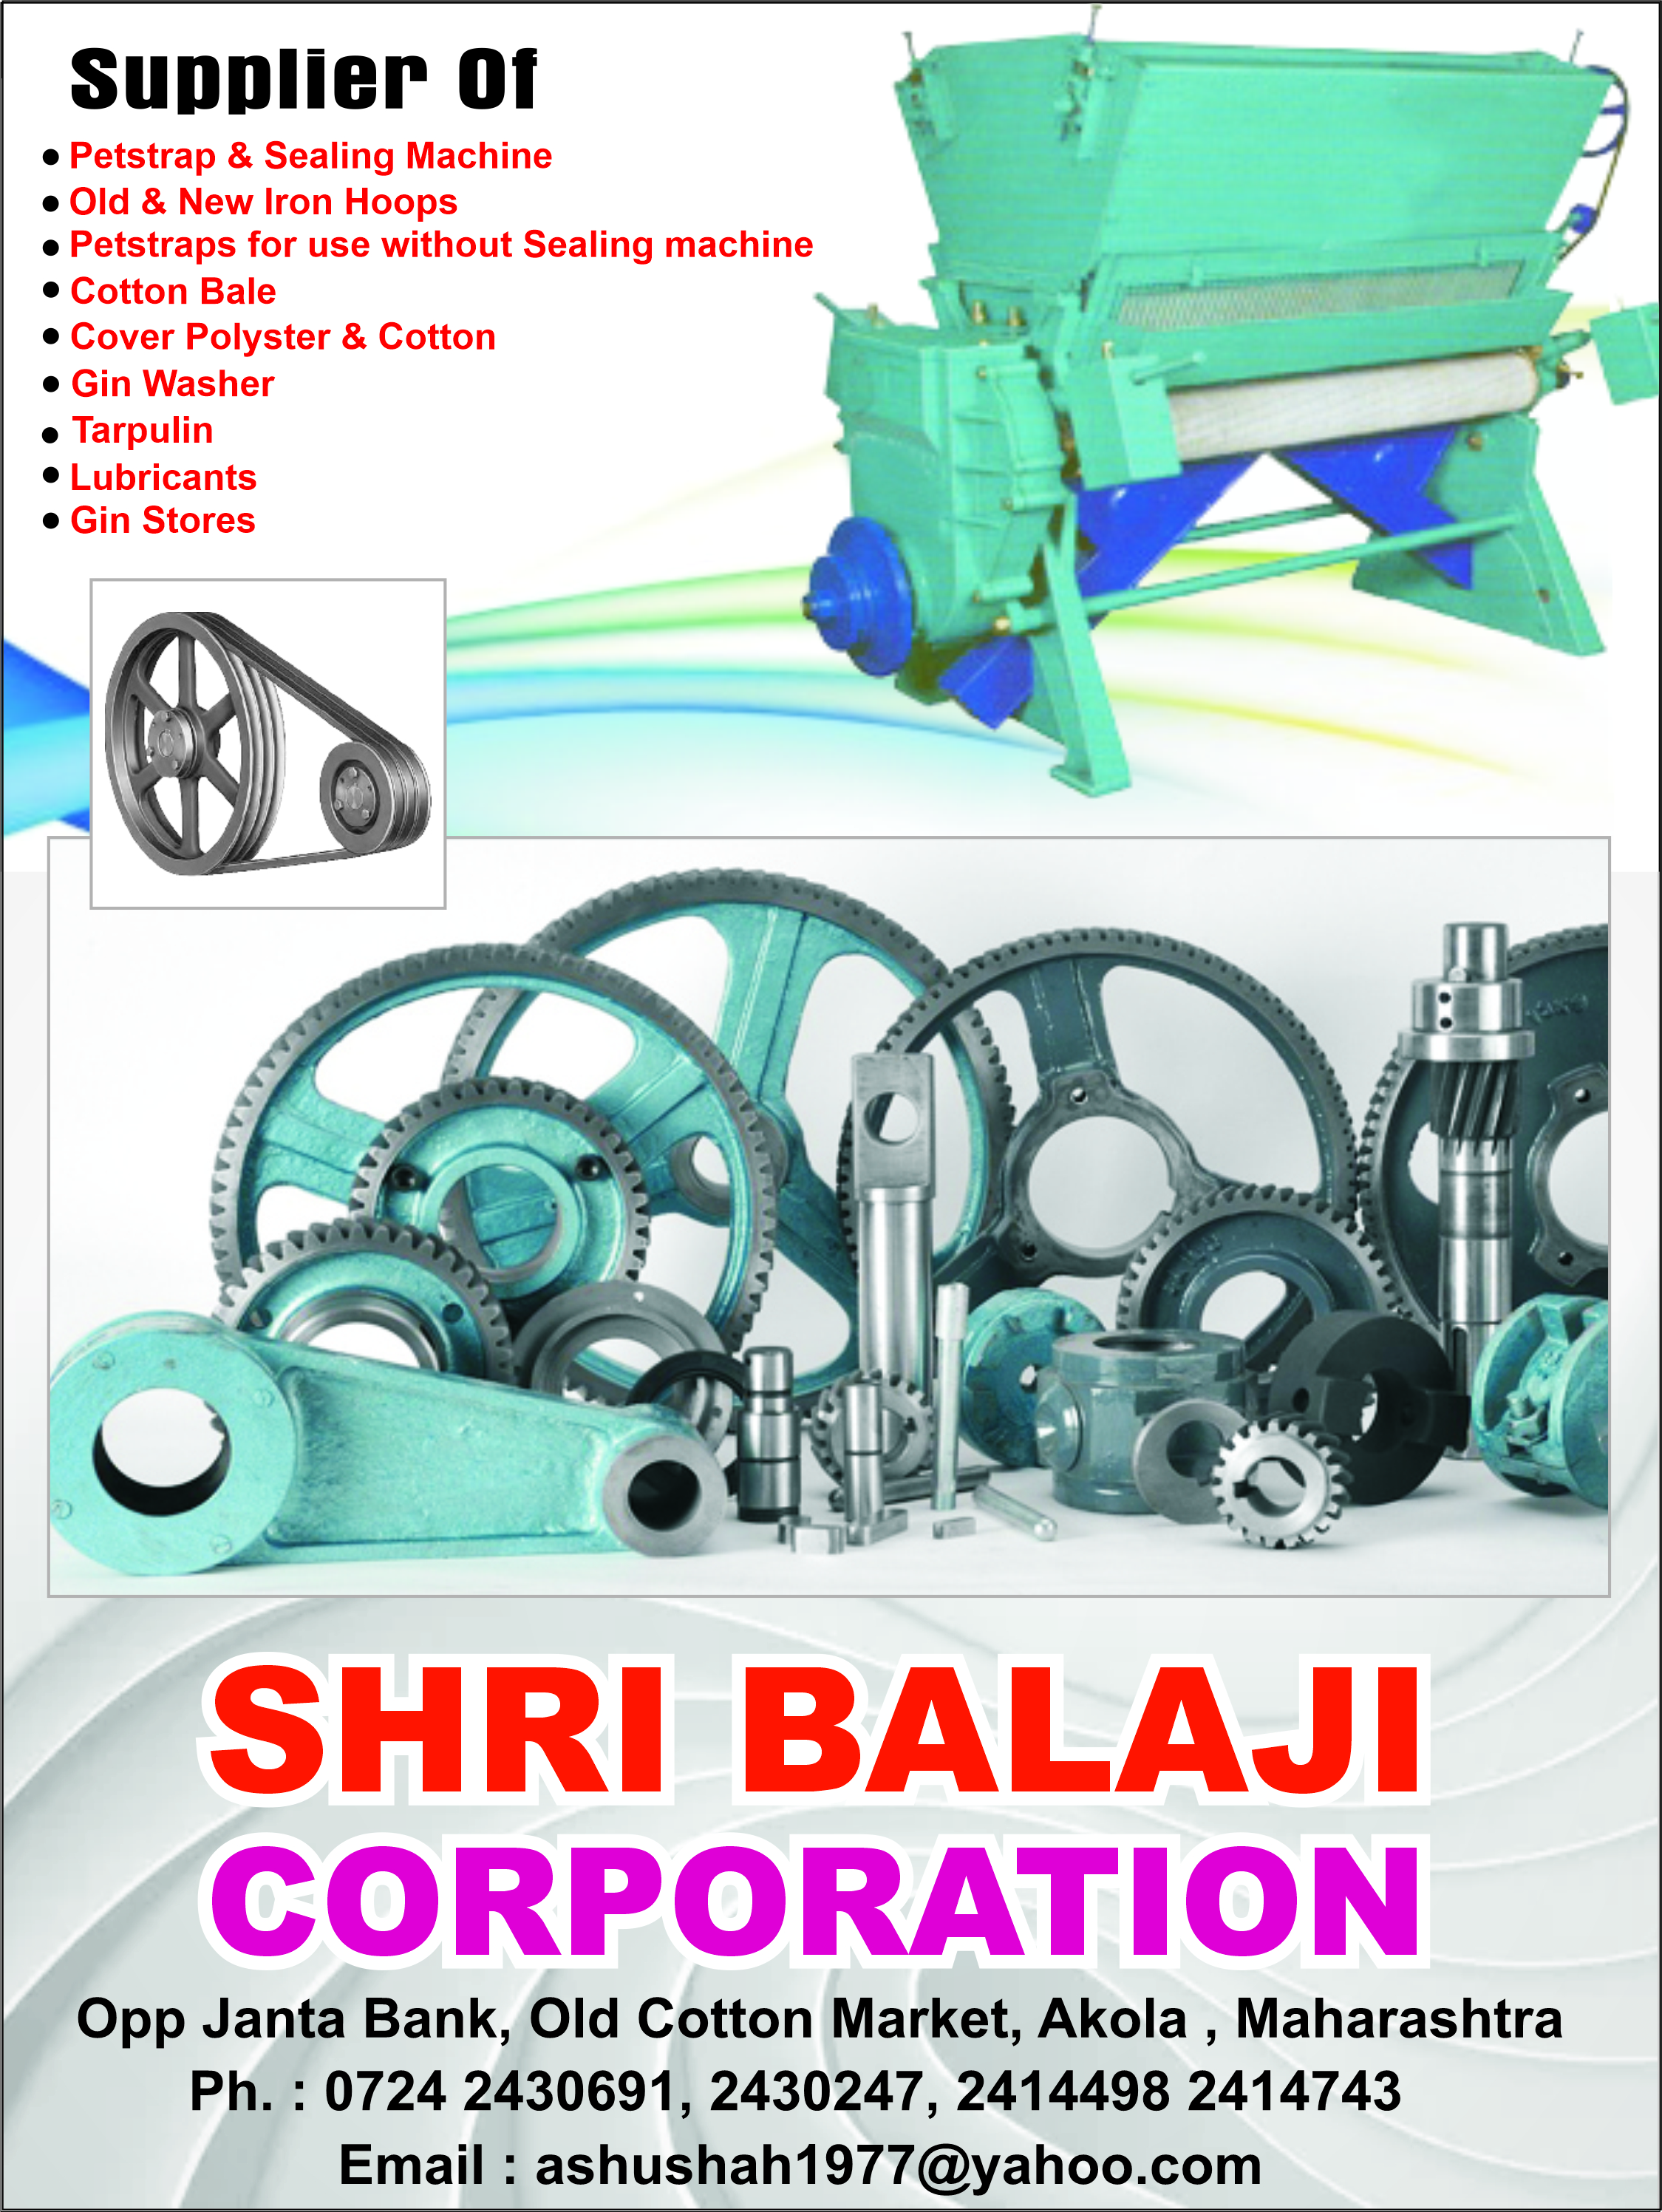 Shri Balaji Corporation